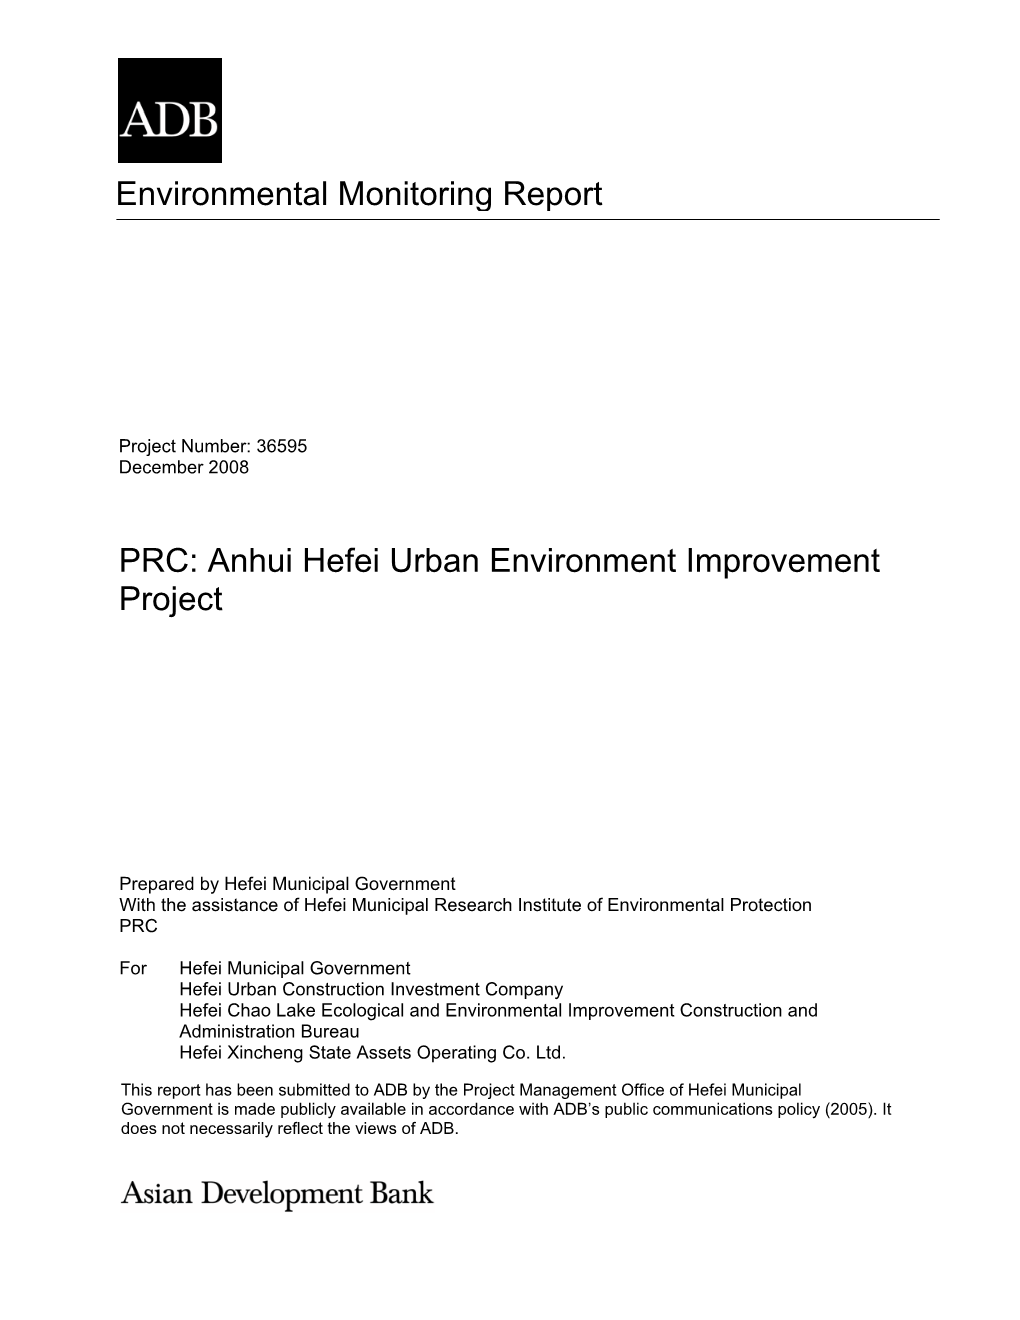 Environmental Monitoring Report PRC: Anhui Hefei Urban Environment